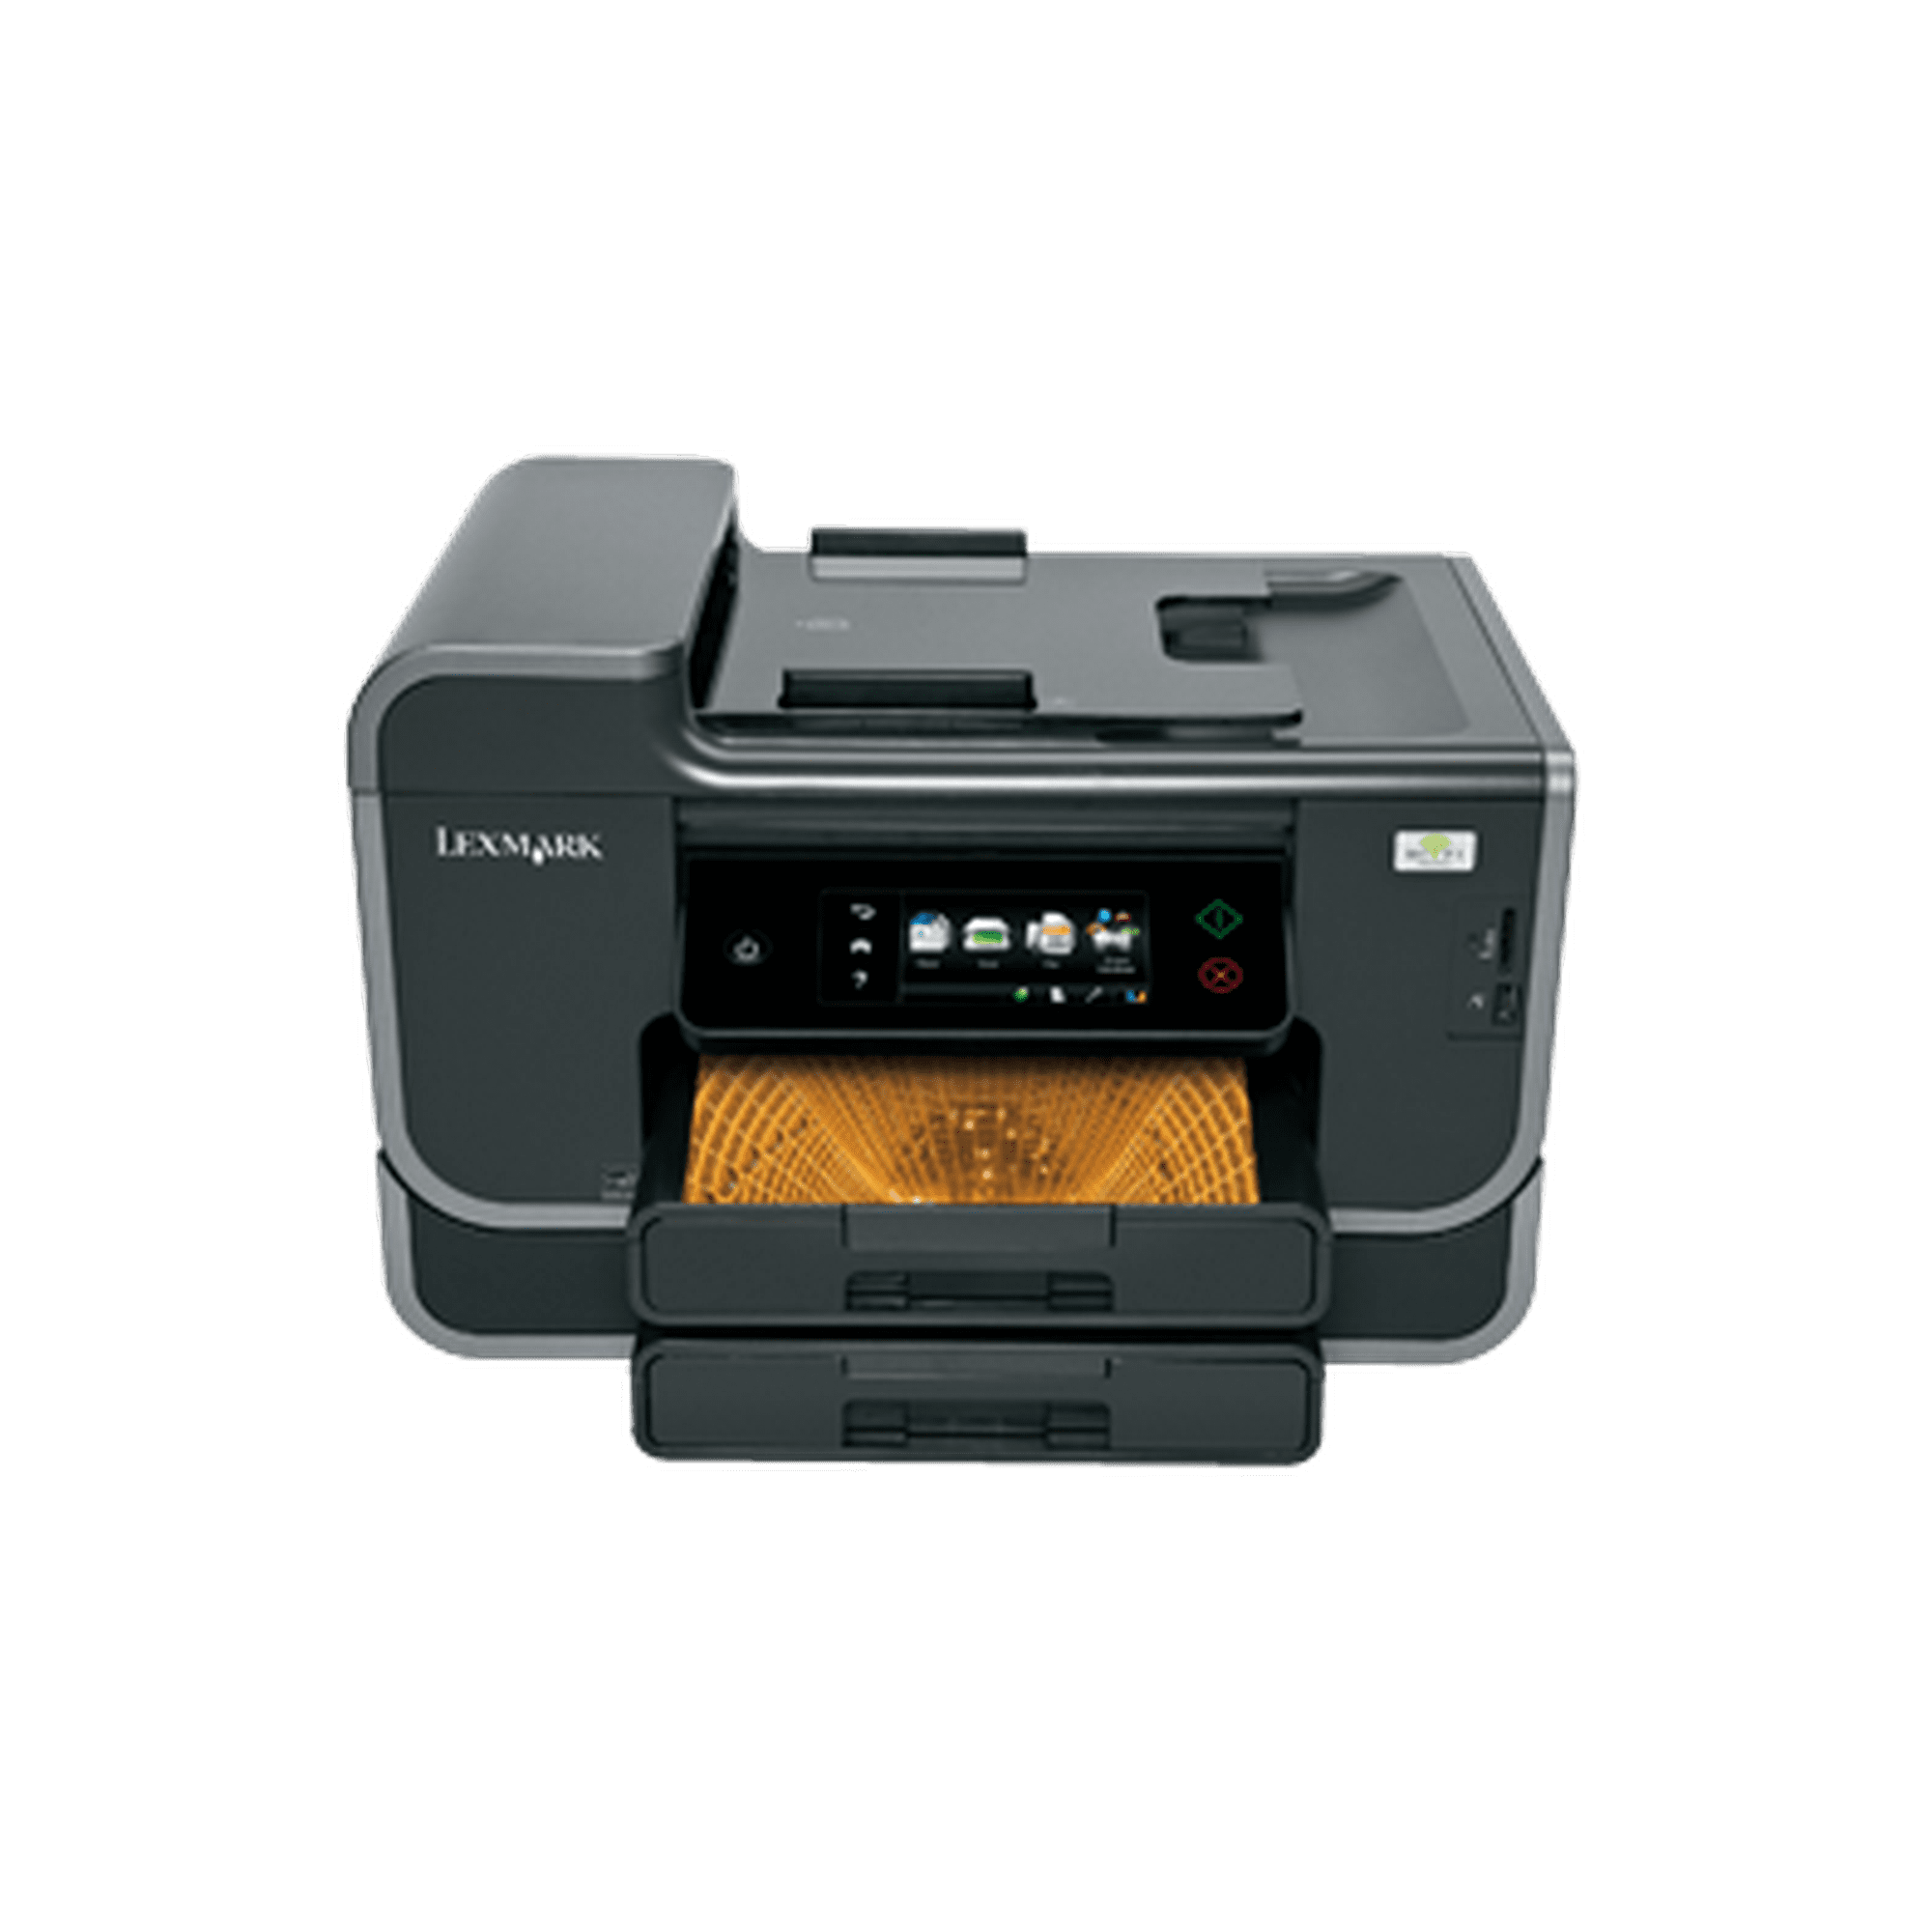 Lexmark Pro905 Printer -New | Walmart Canada